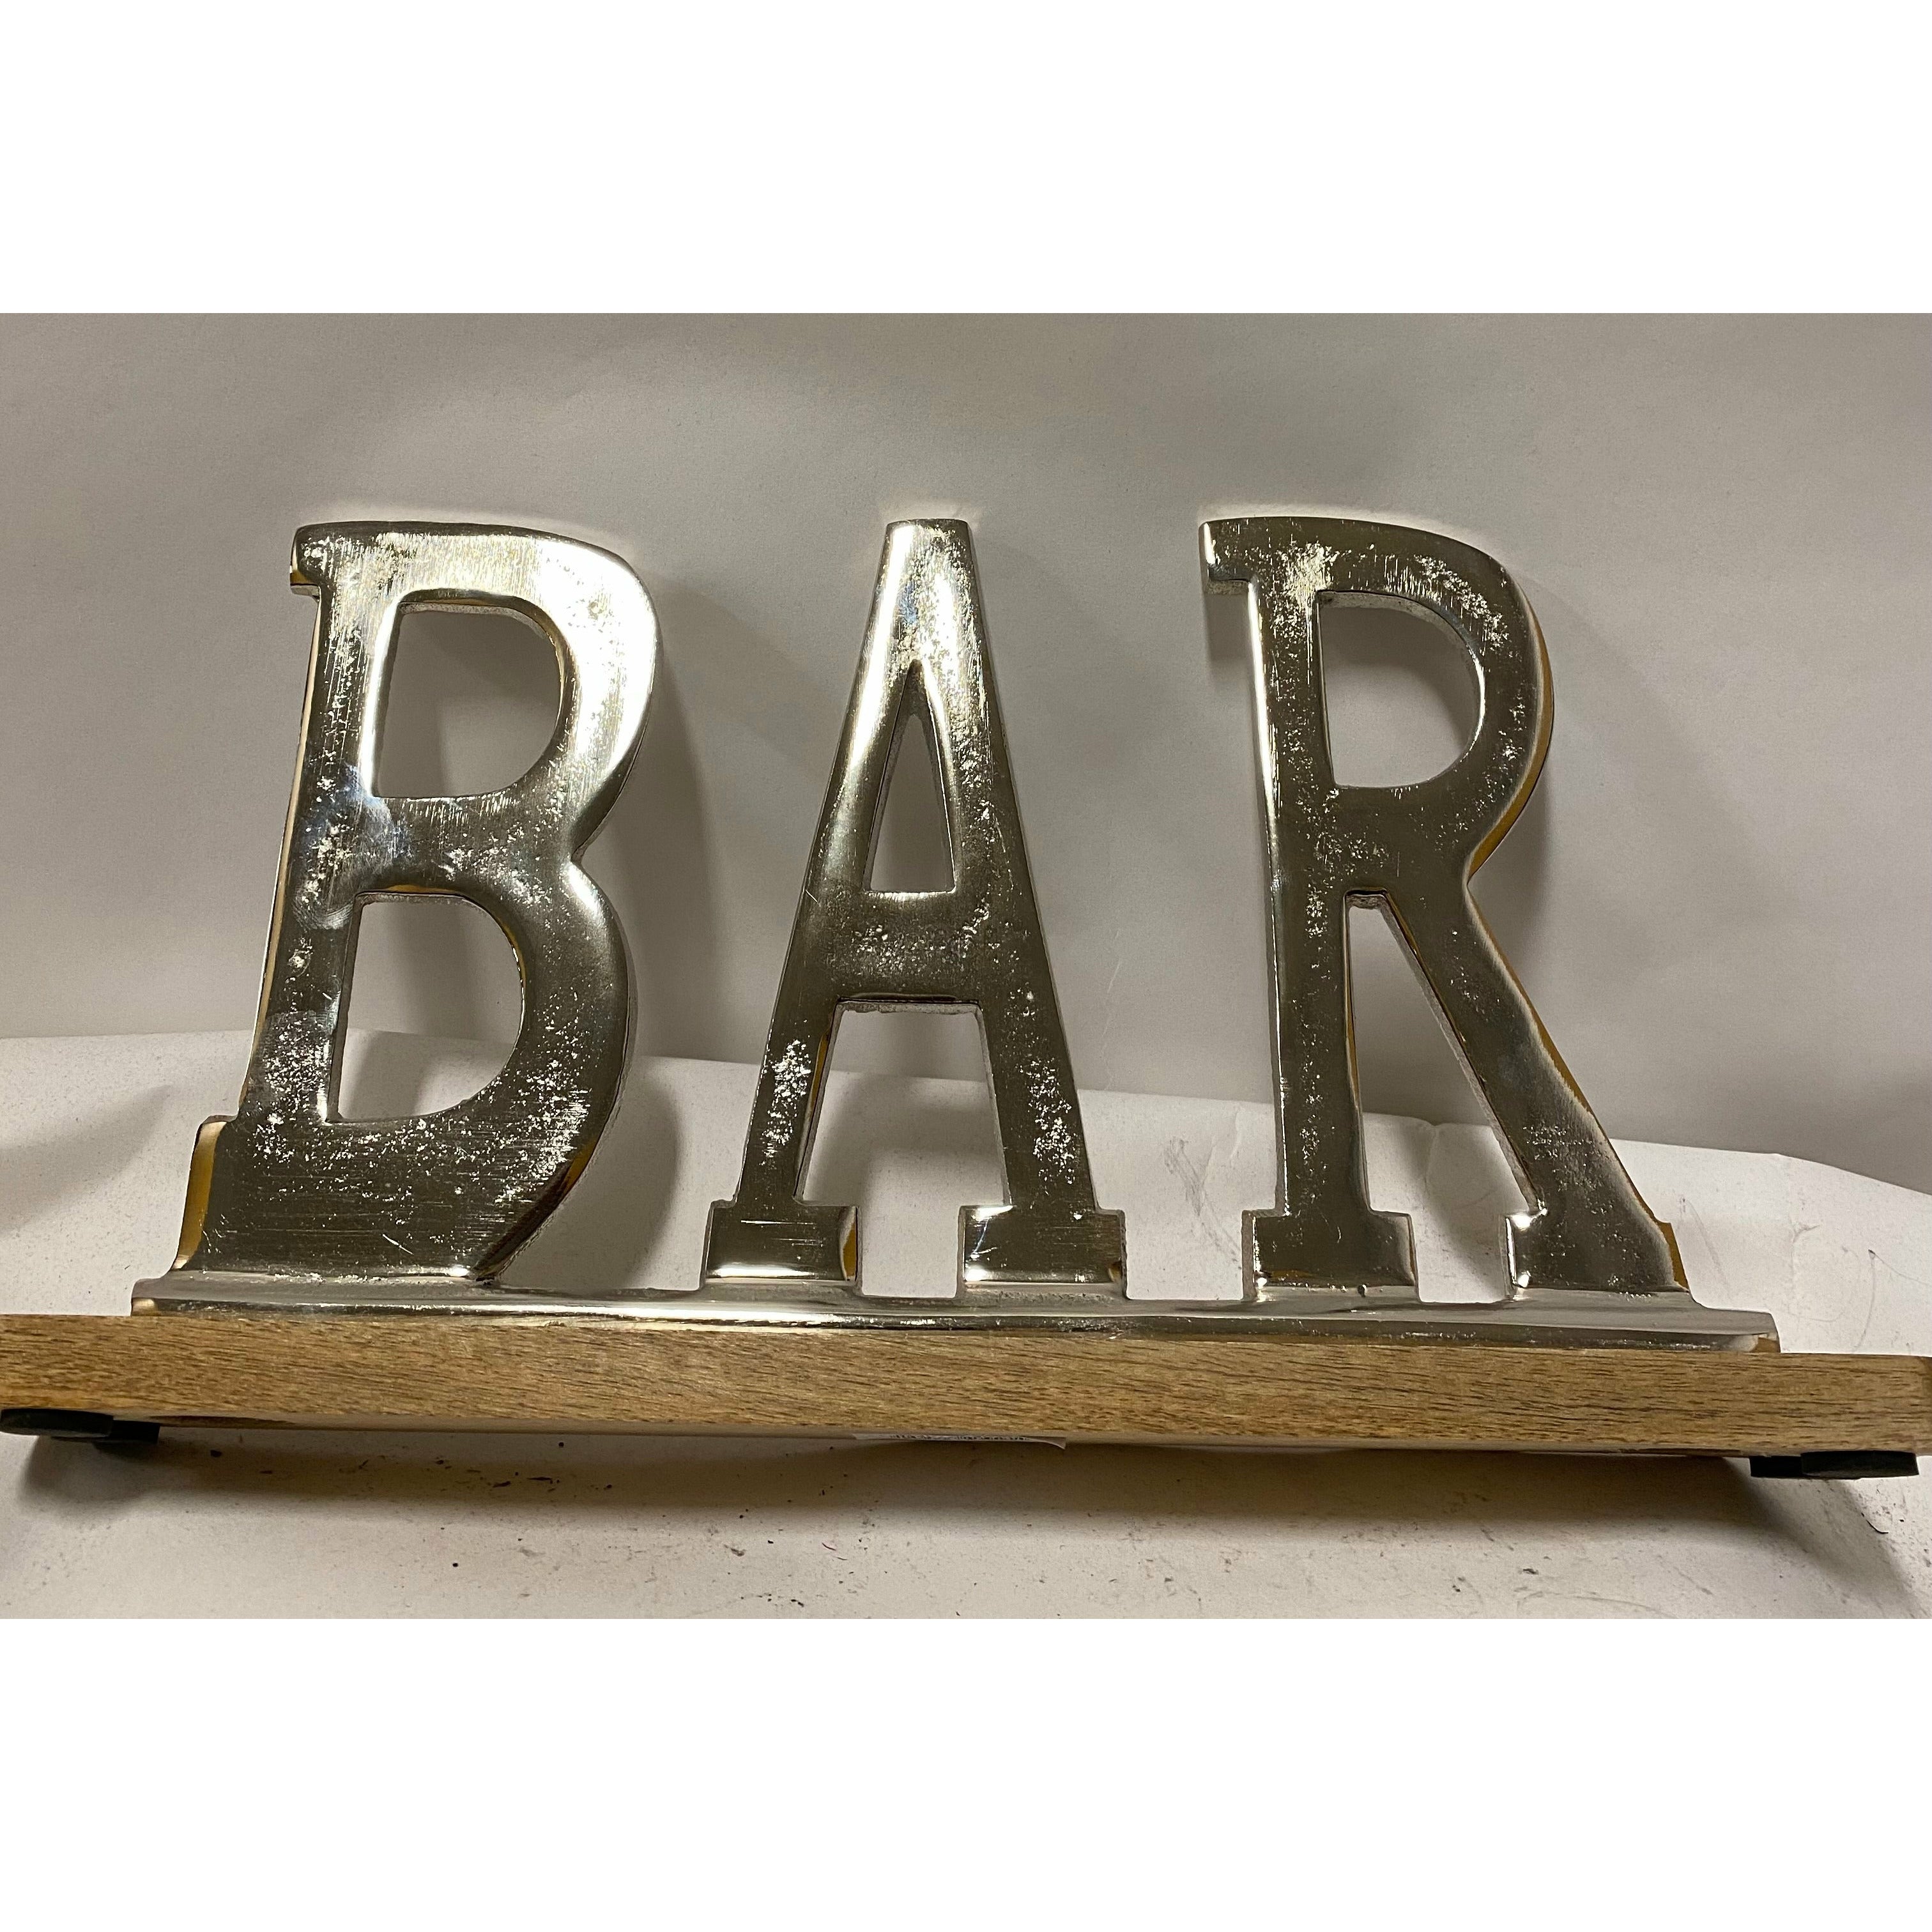 Aluminum table top Bar sign